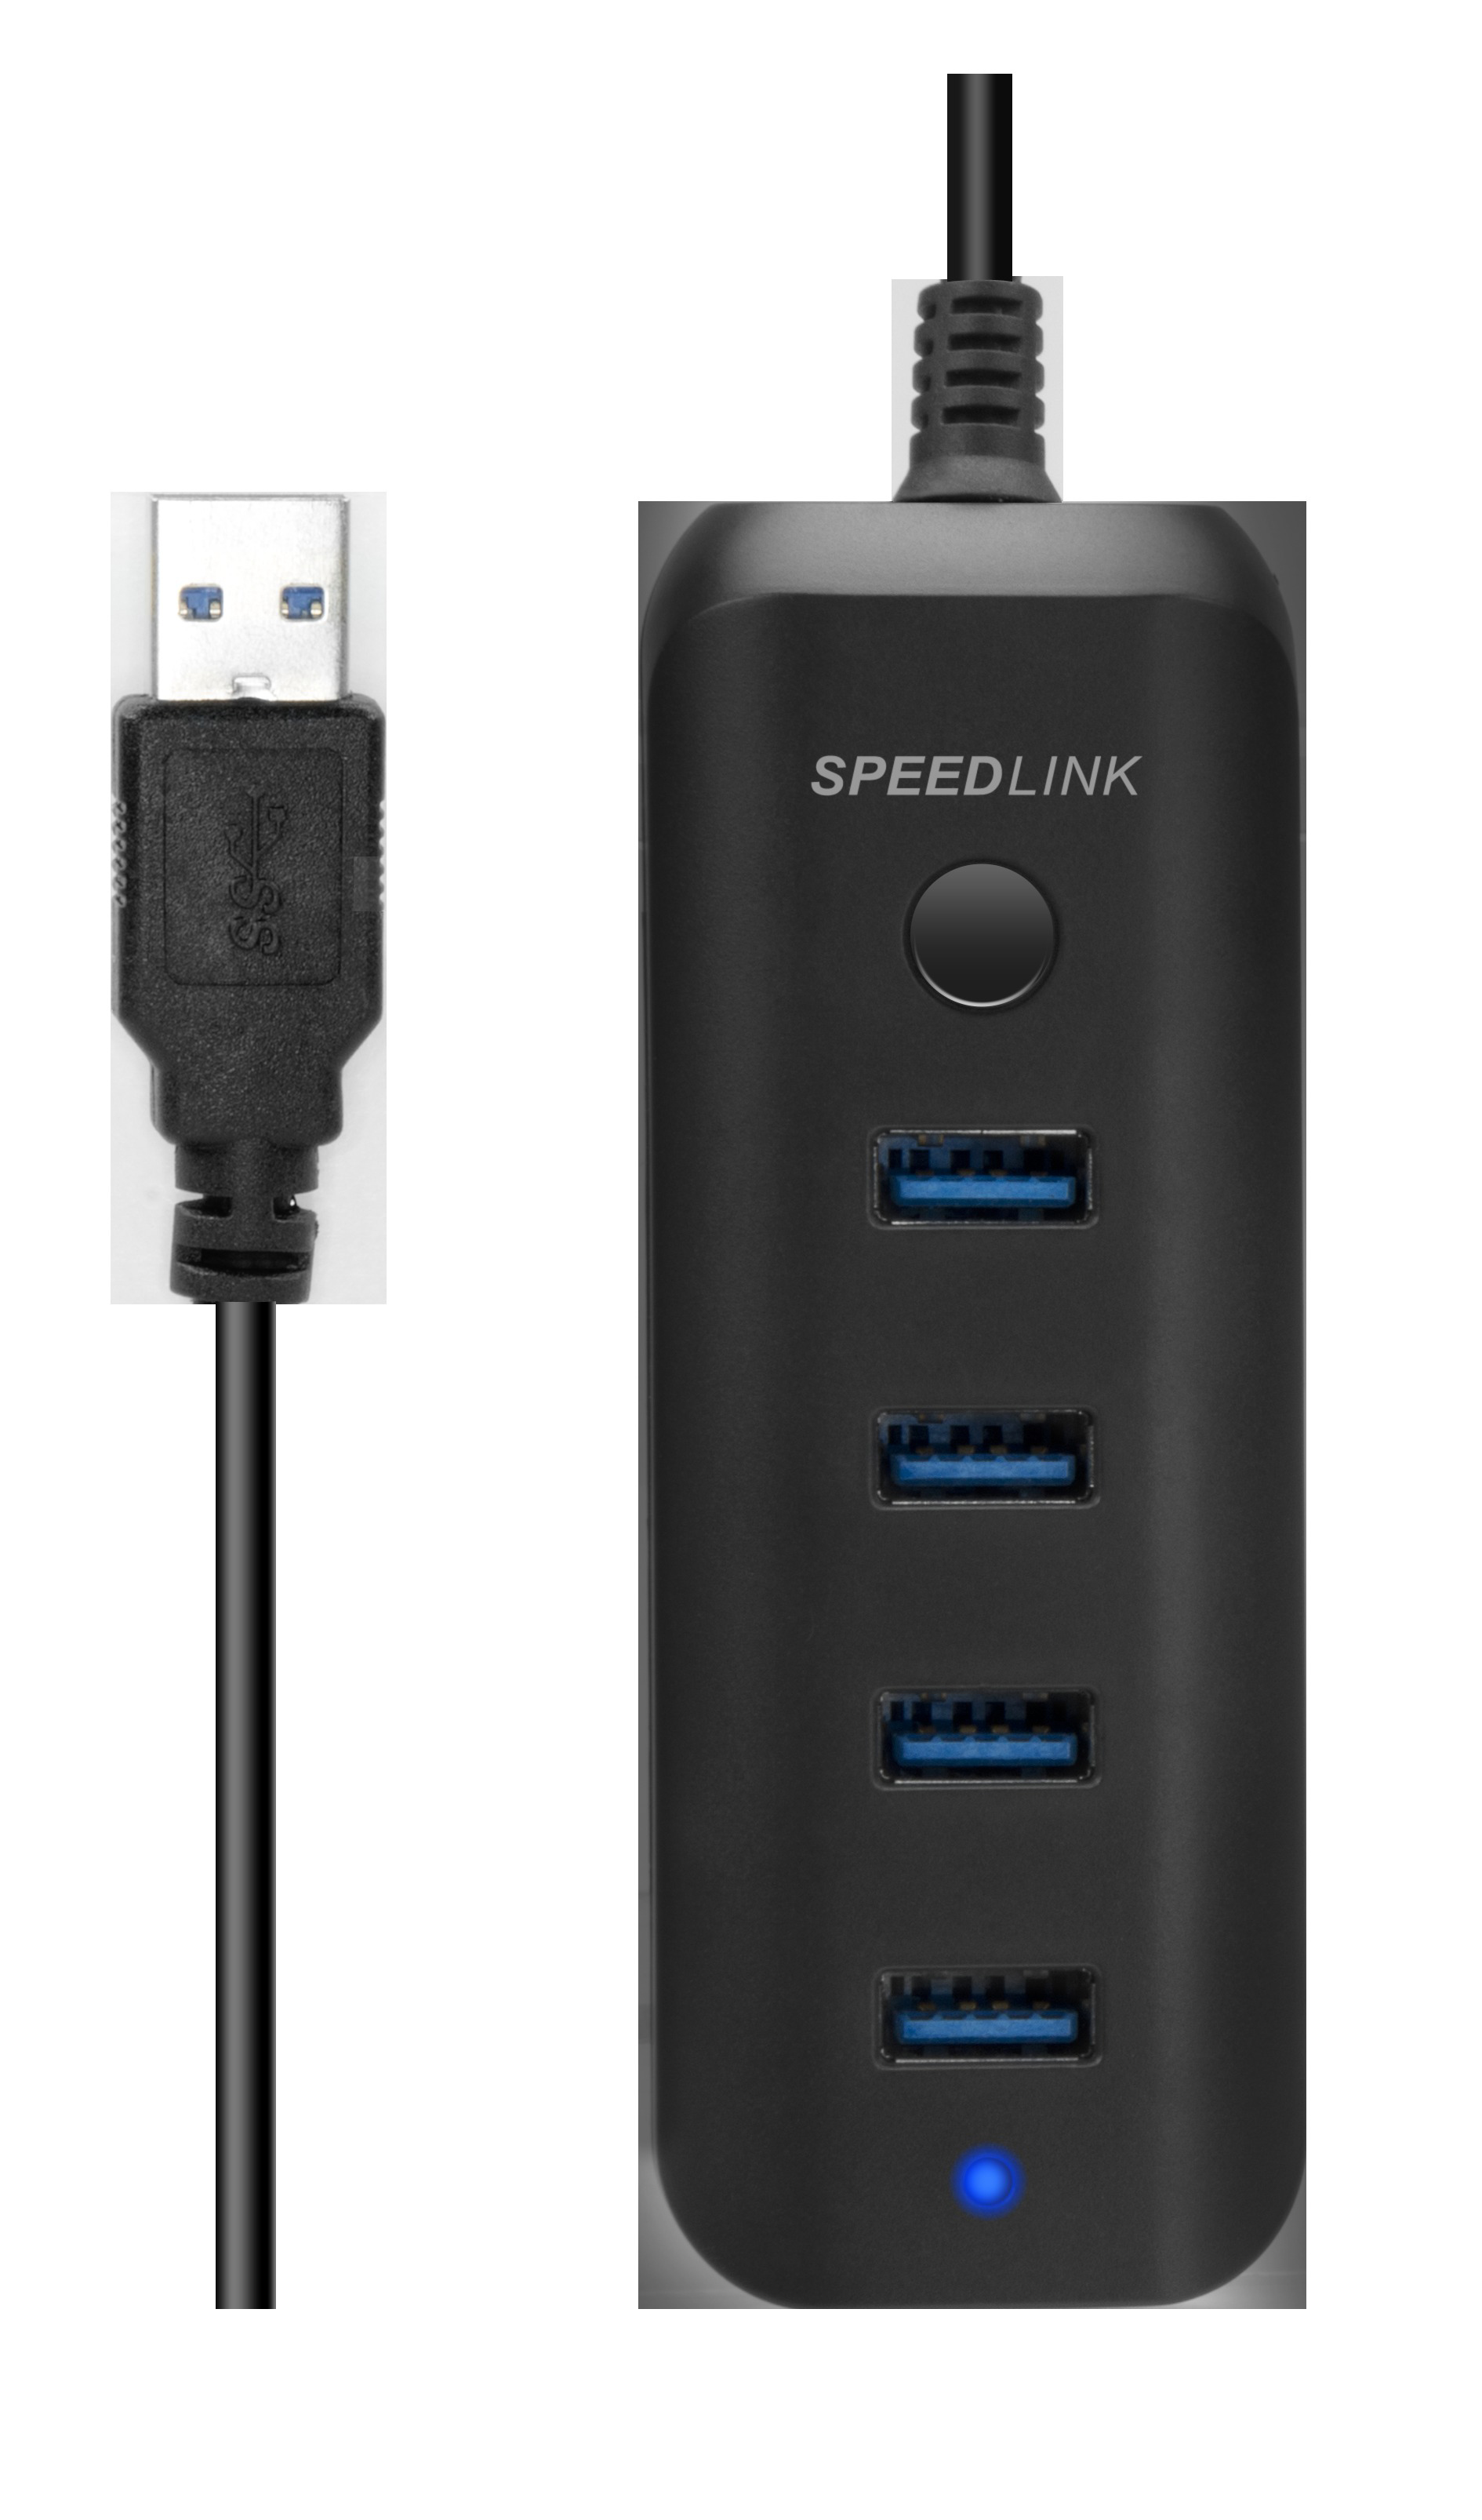 SPEEDLINK FORAX 4 - USB Hub, Hub für Schwarz PC, USB Port